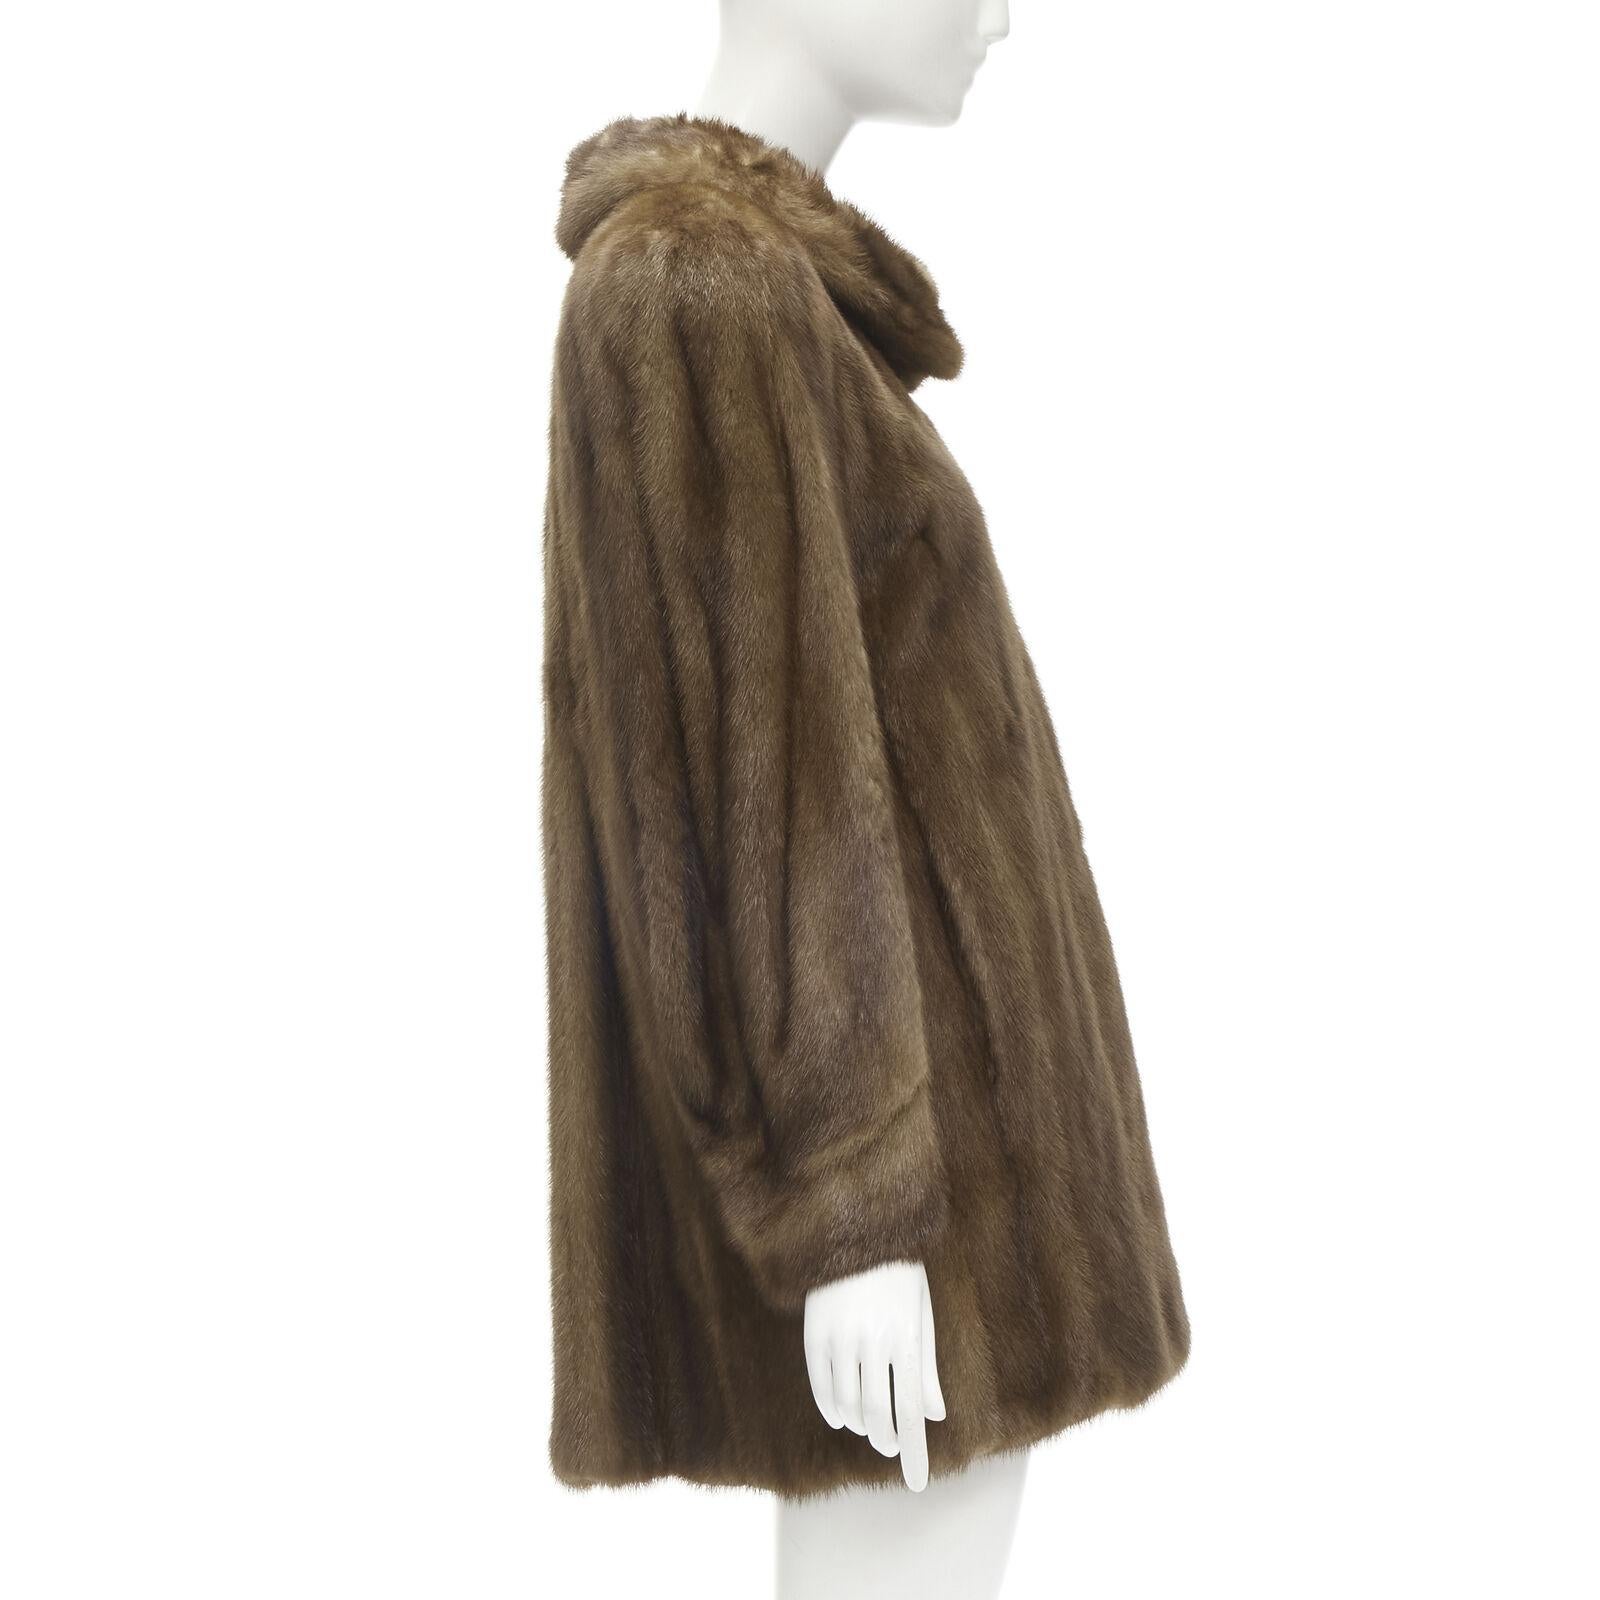 M JACQUES brown fur peter pan collar long sleeve hook eye coat jacket For Sale 1